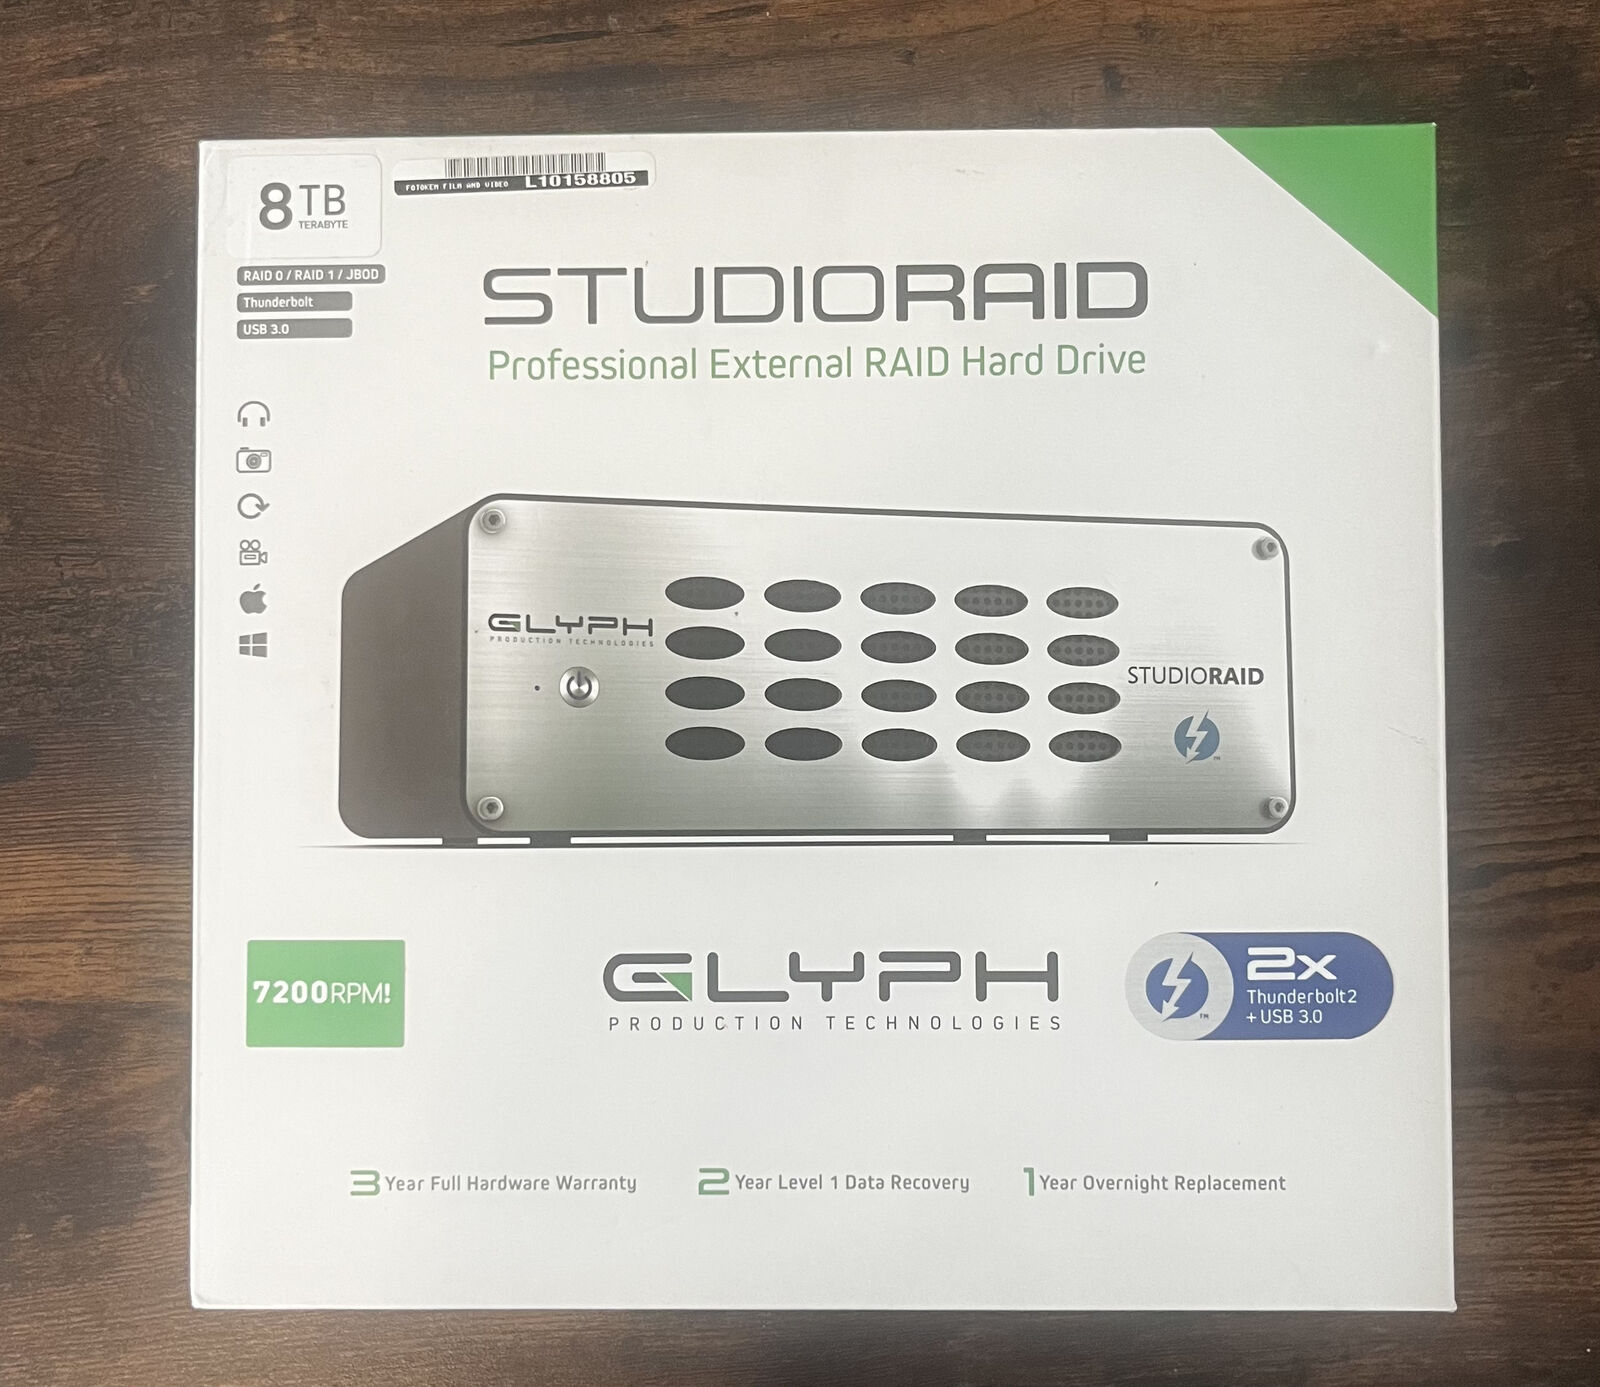 GLYPH SR8000 STUDIORAID 8TB 2-BAY USB 3.1 GEN 1 RAID ARRAY EXTERNAL HARD DRIVE